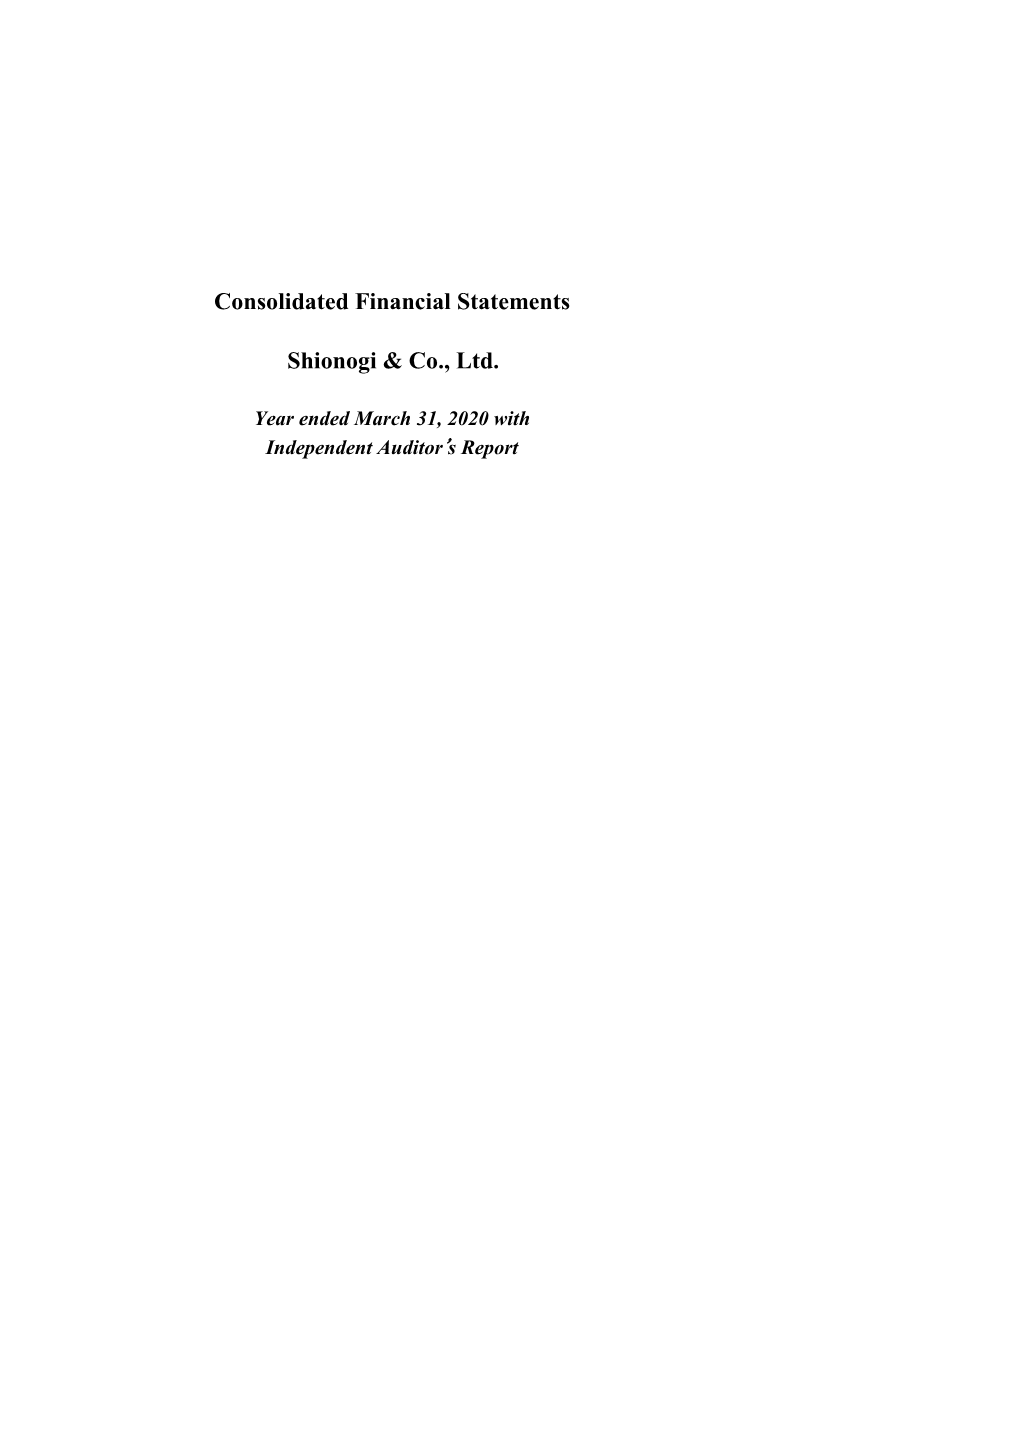 Consolidated Financial Statements Shionogi & Co., Ltd